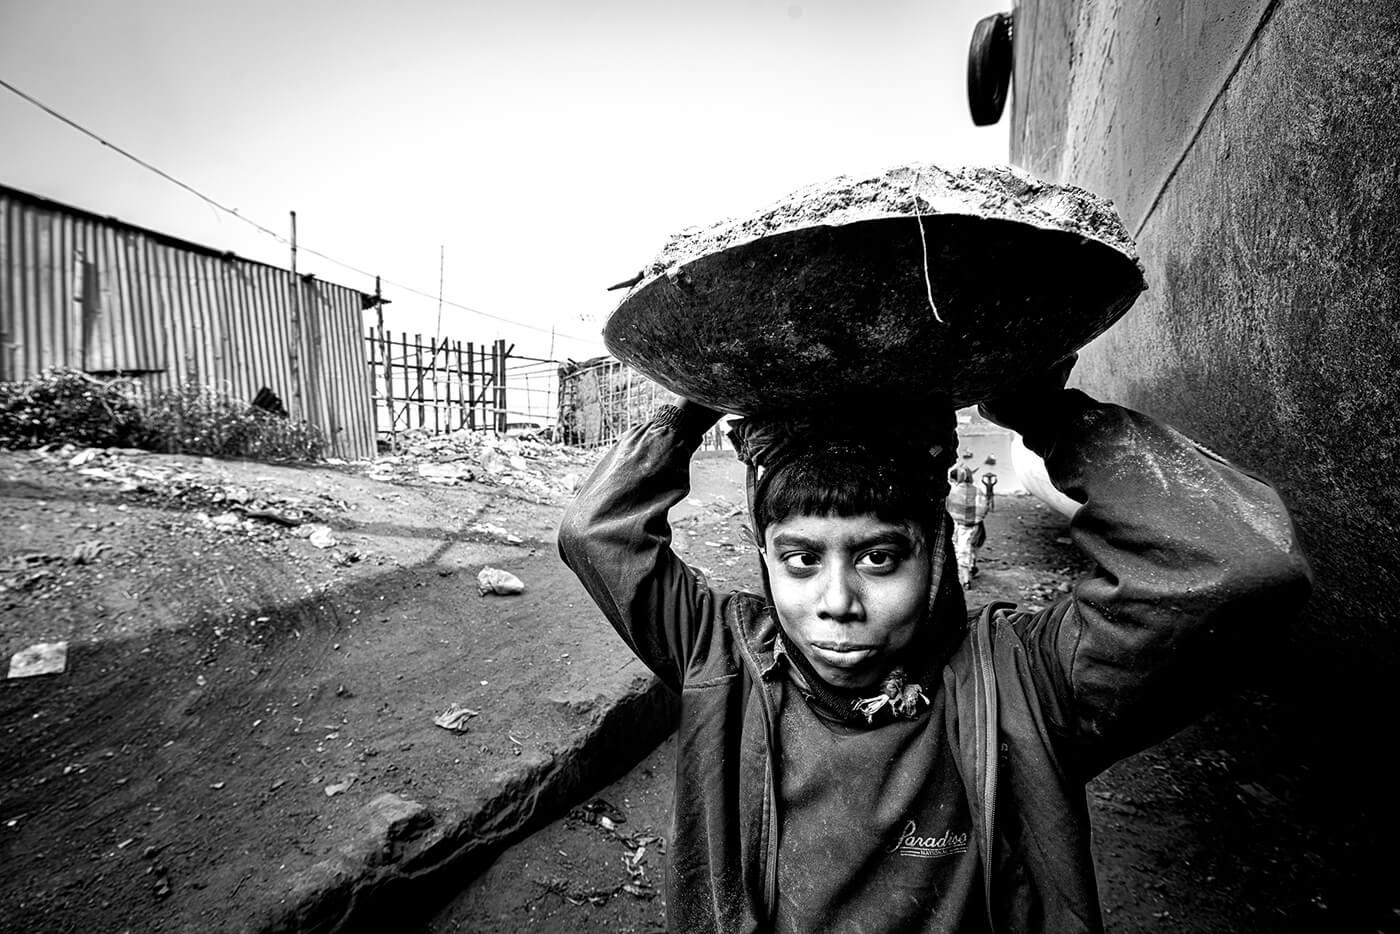 Child Labour by Hana Peskova